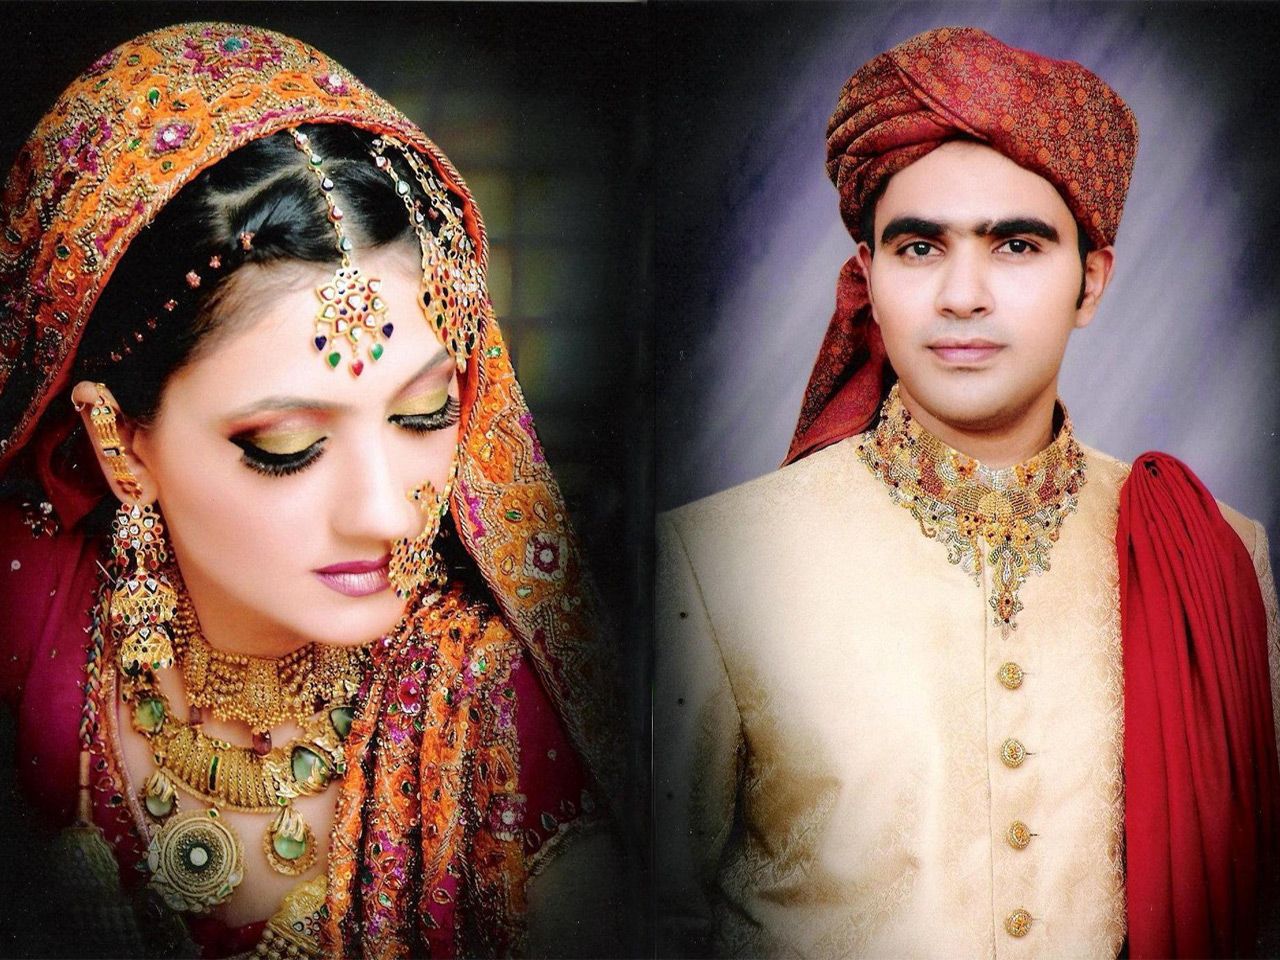 pakistani wedding couple wallpapers,beauty,tradition,headgear,bride,fashion accessory